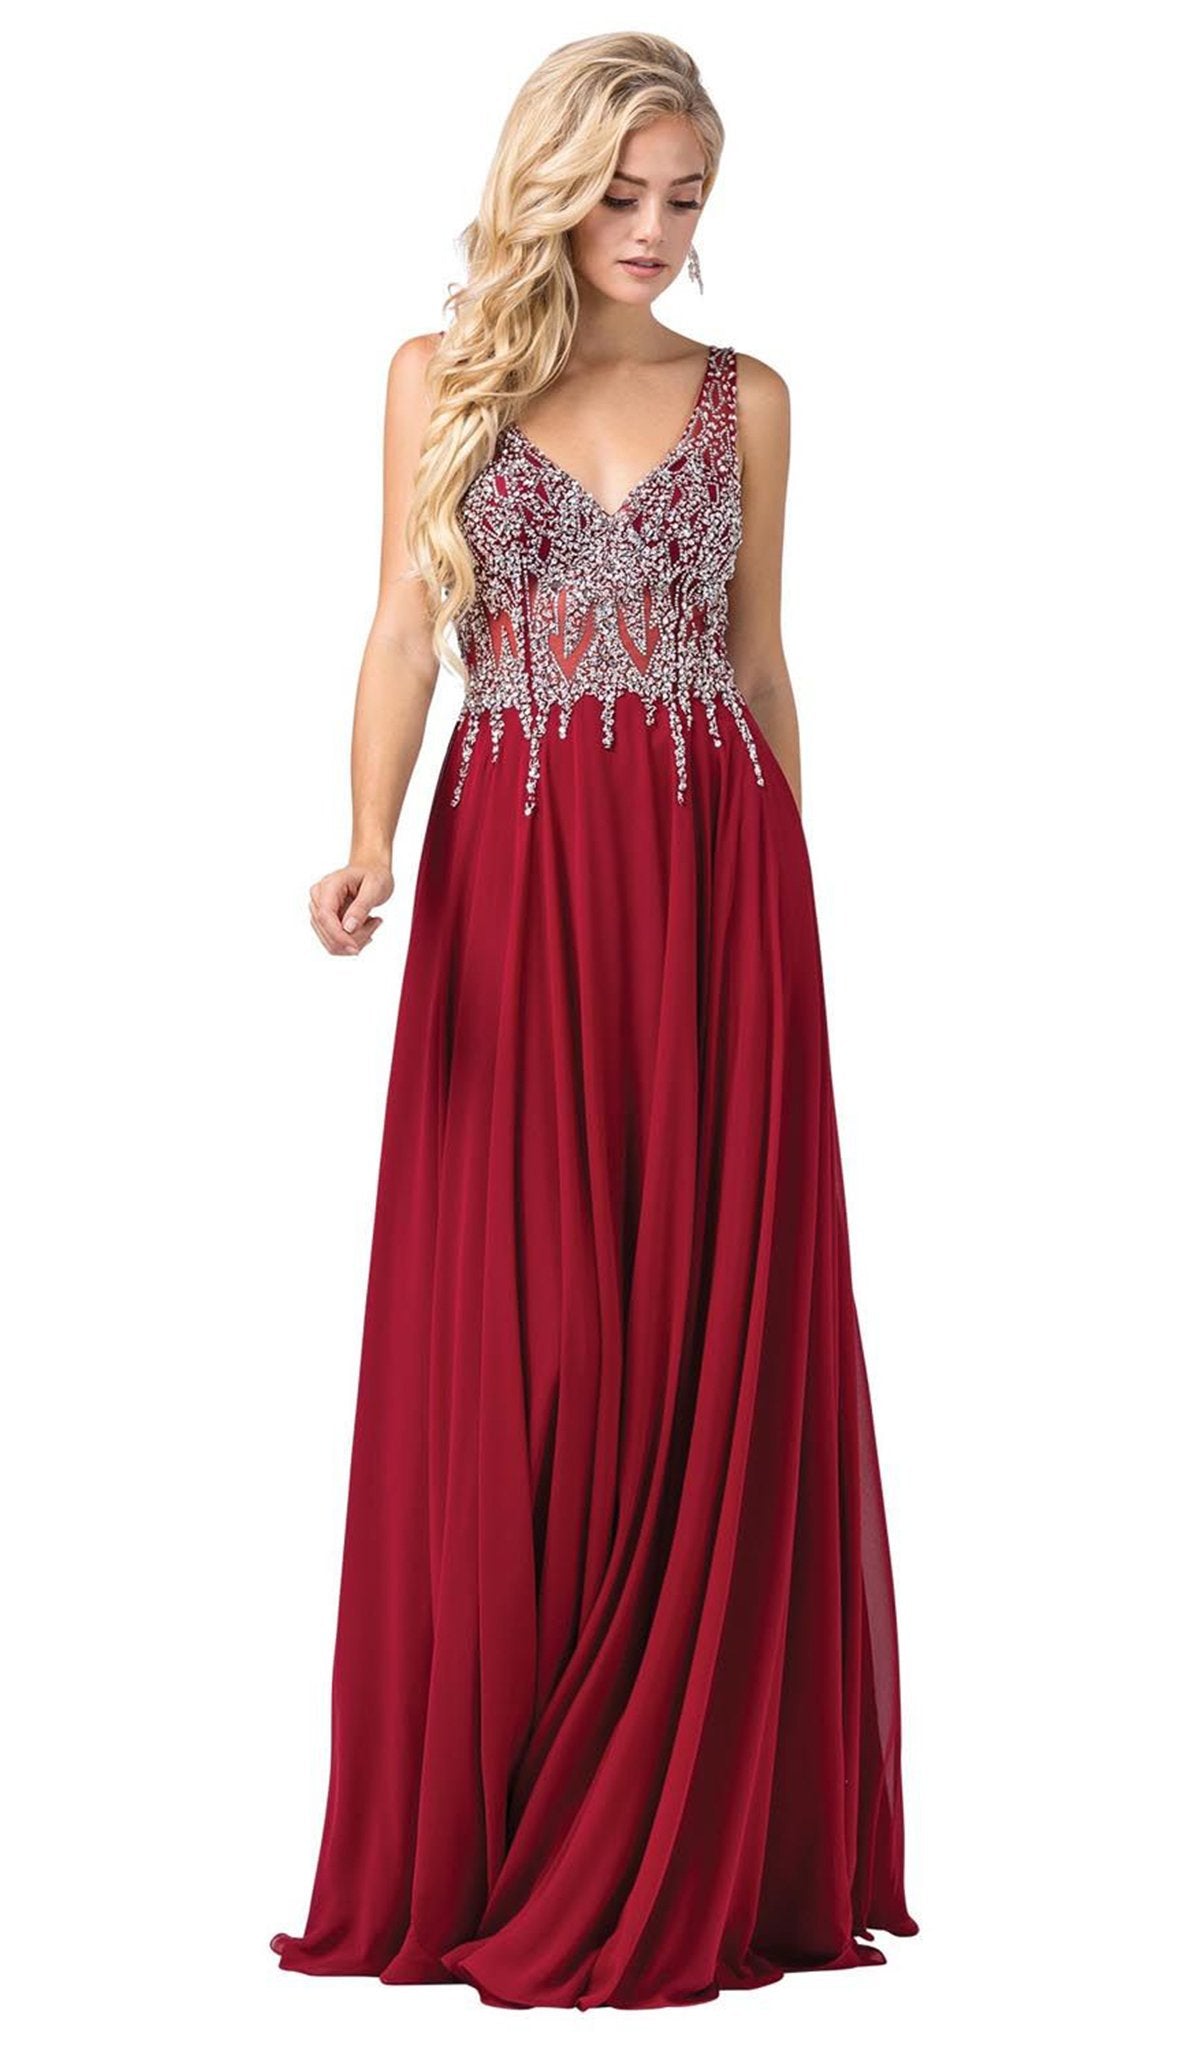 Dancing Queen - 2570 Jewel Ornate Illusion Bodice Chiffon Prom Dress In Red